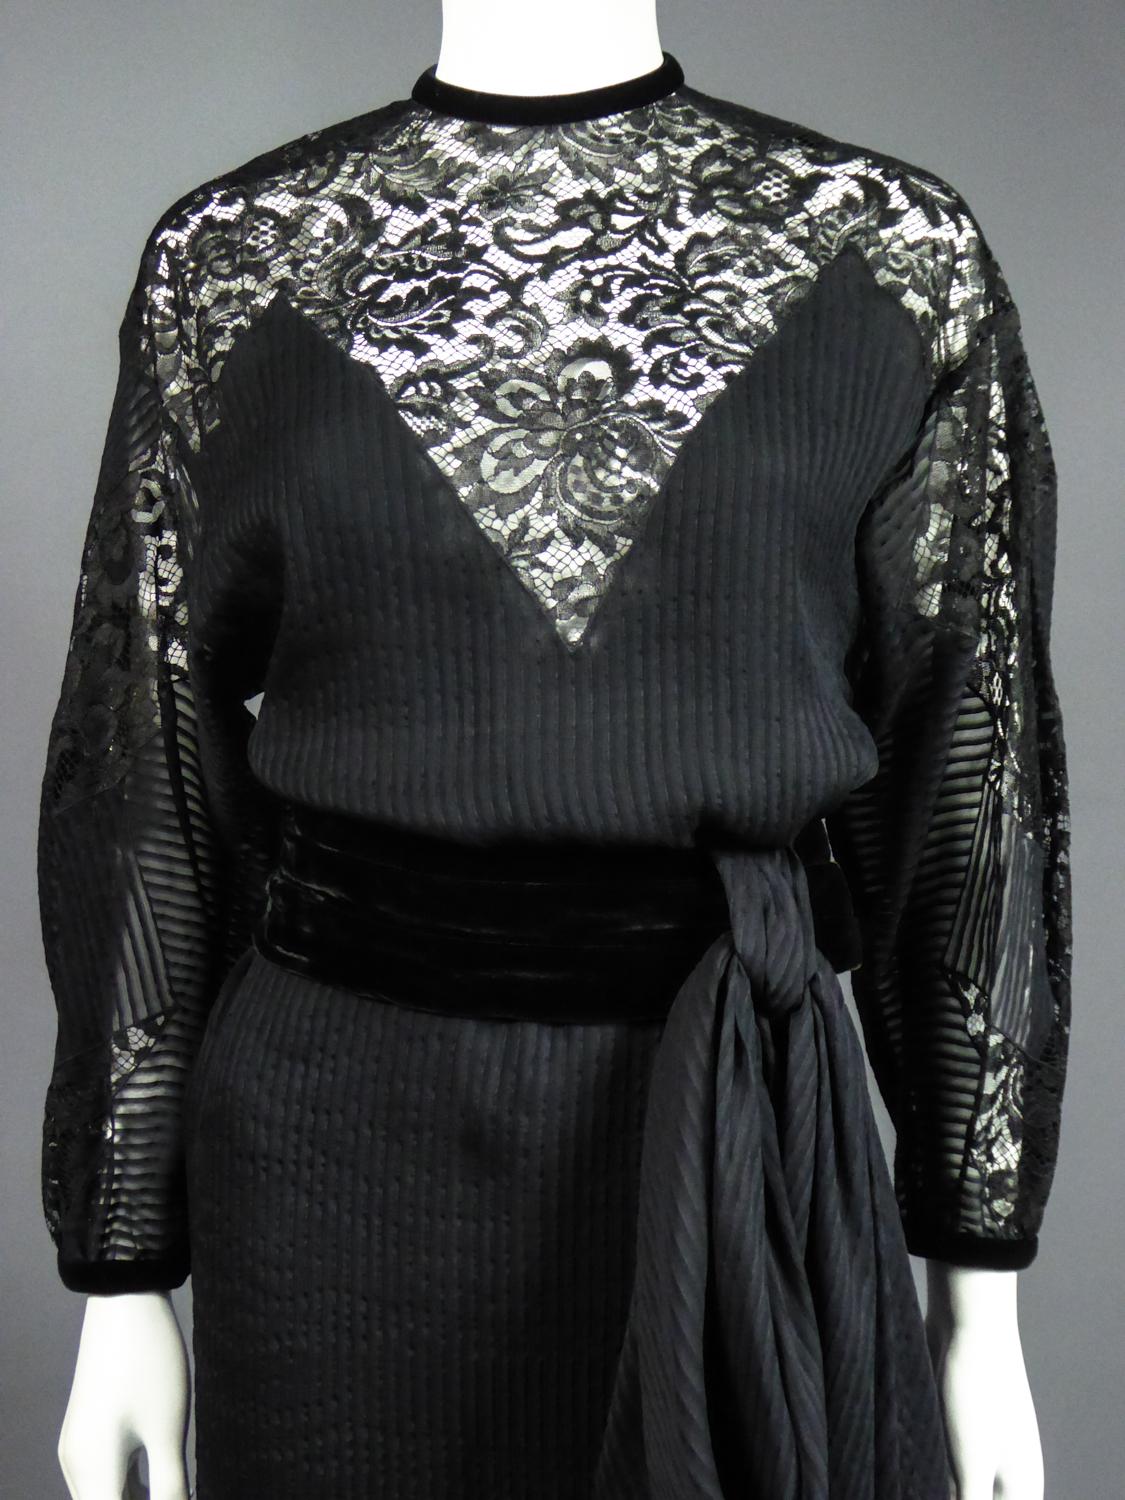 Women's A Christian Dior-Marc Bohan Little Black Dress numbered 15843 Spring Summer 1982 For Sale